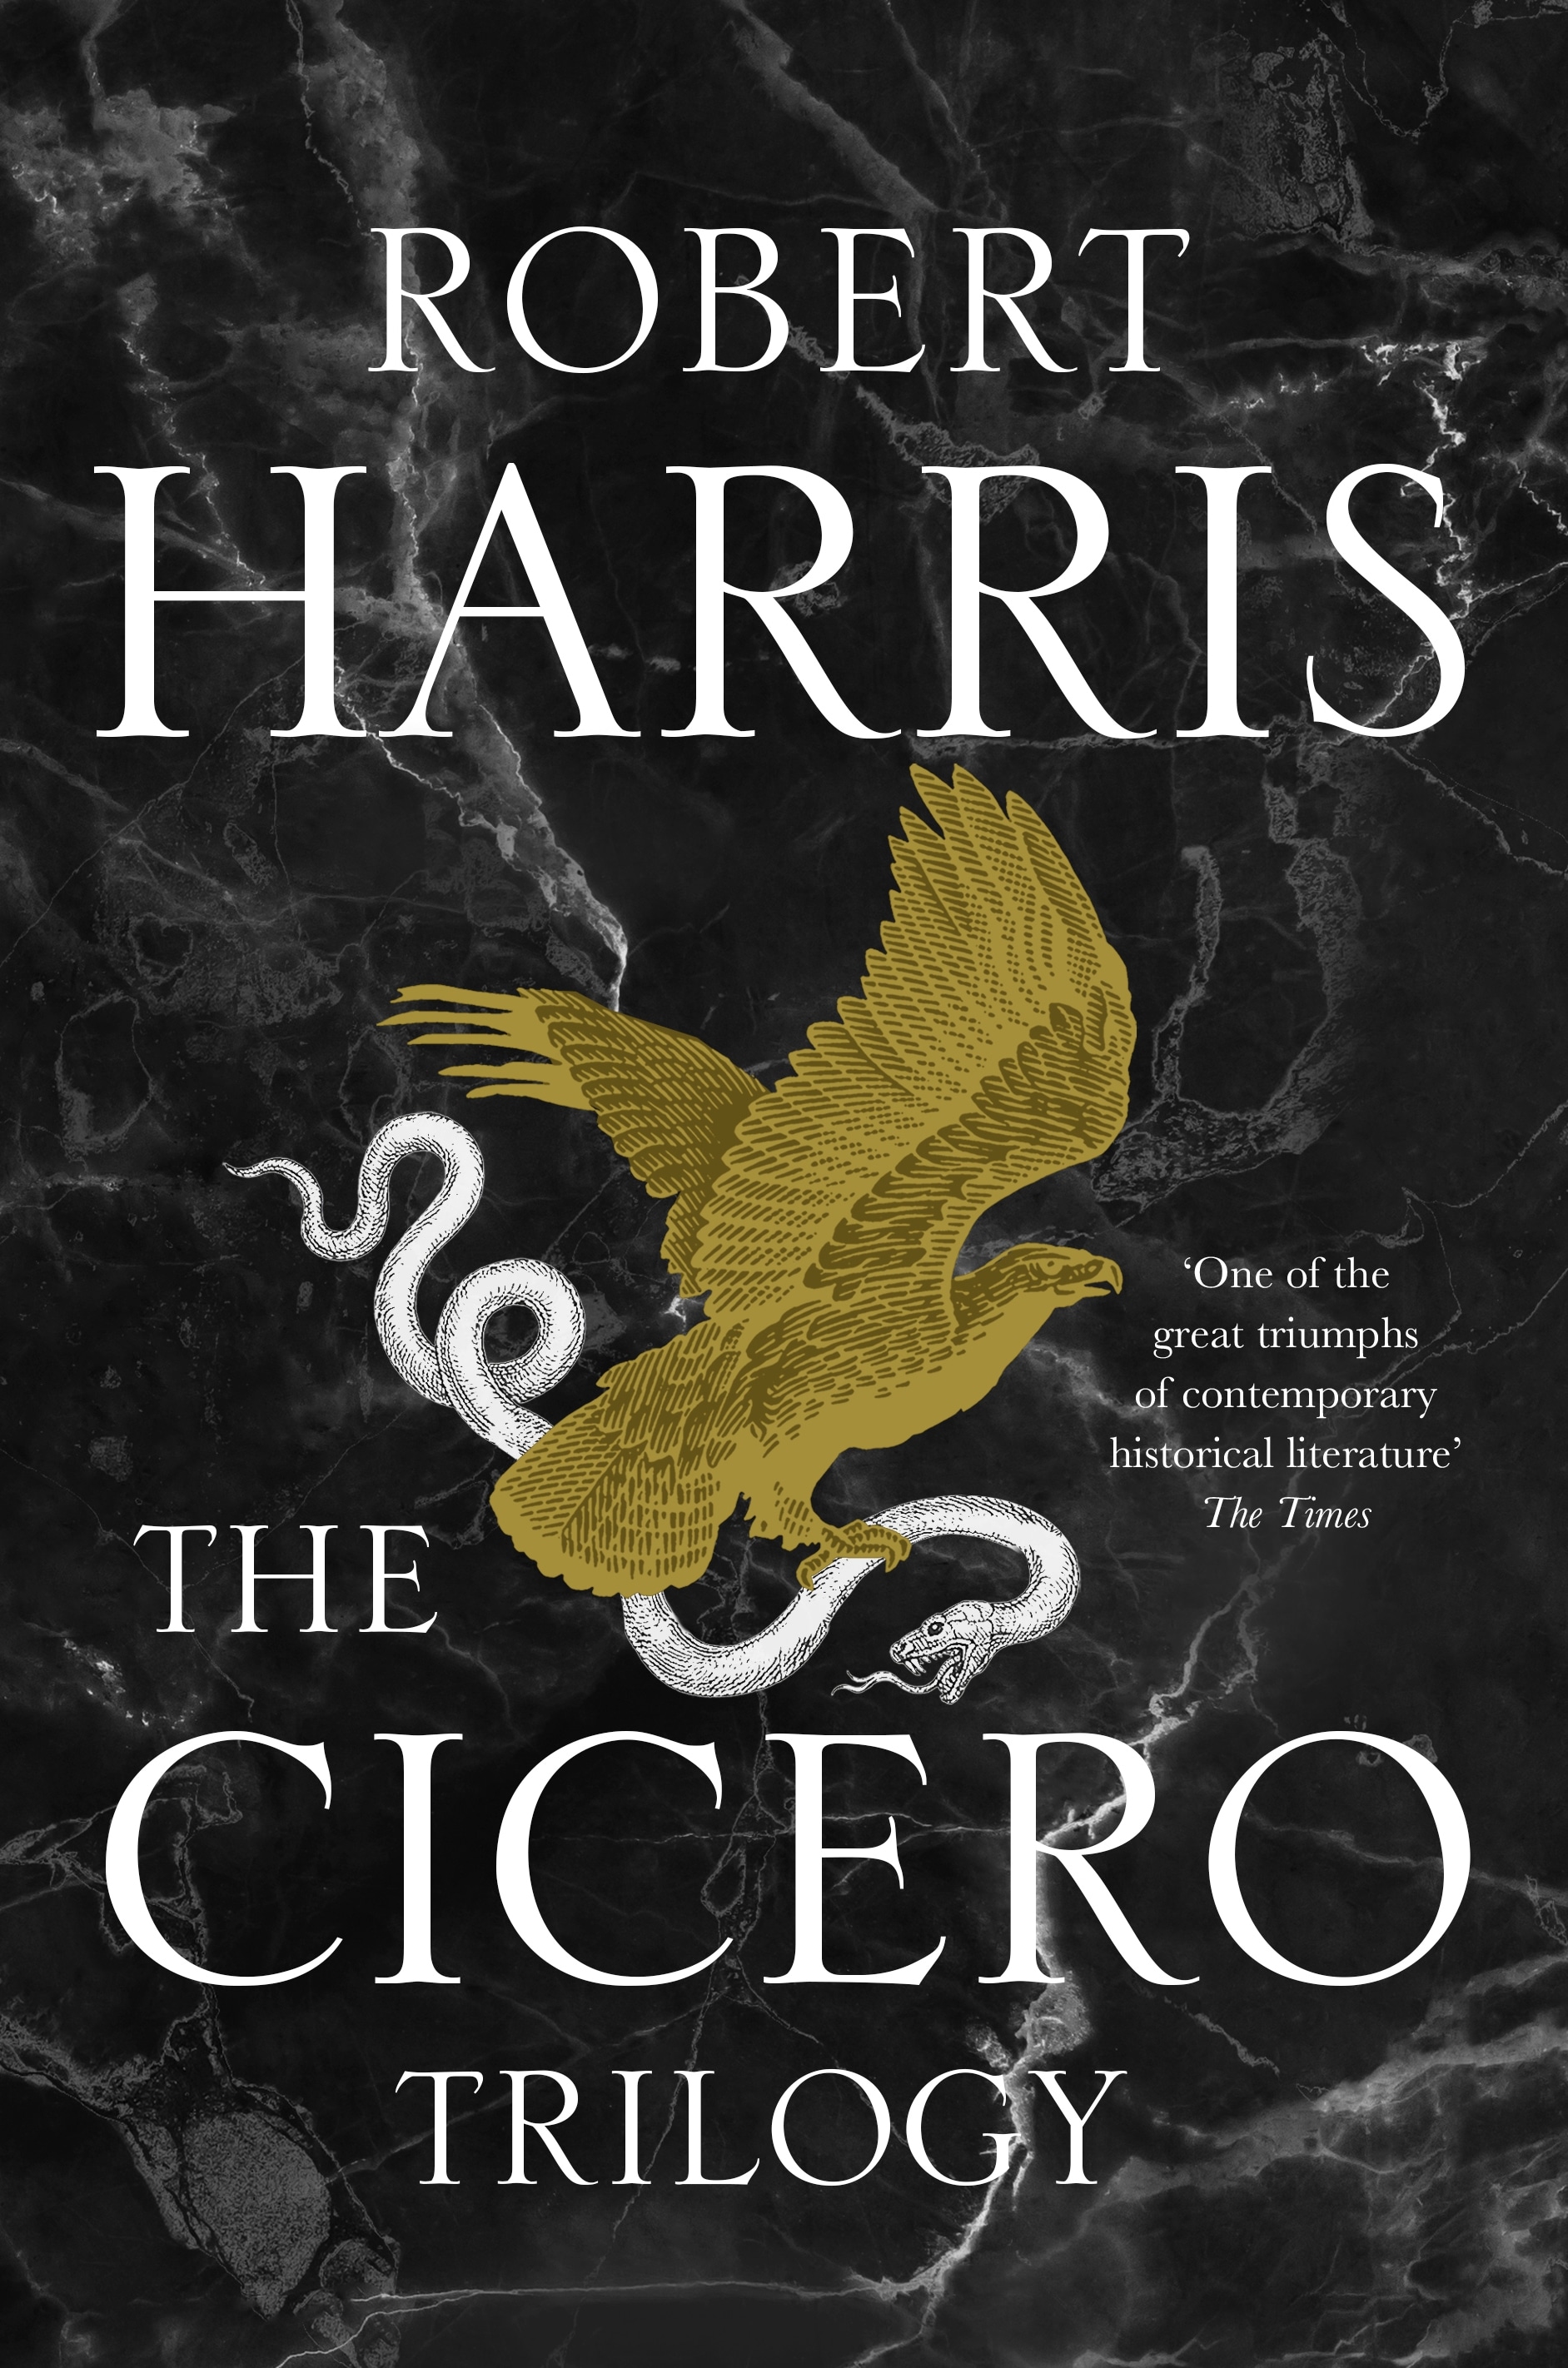 Book “The Cicero Trilogy” by Robert Harris — September 16, 2021